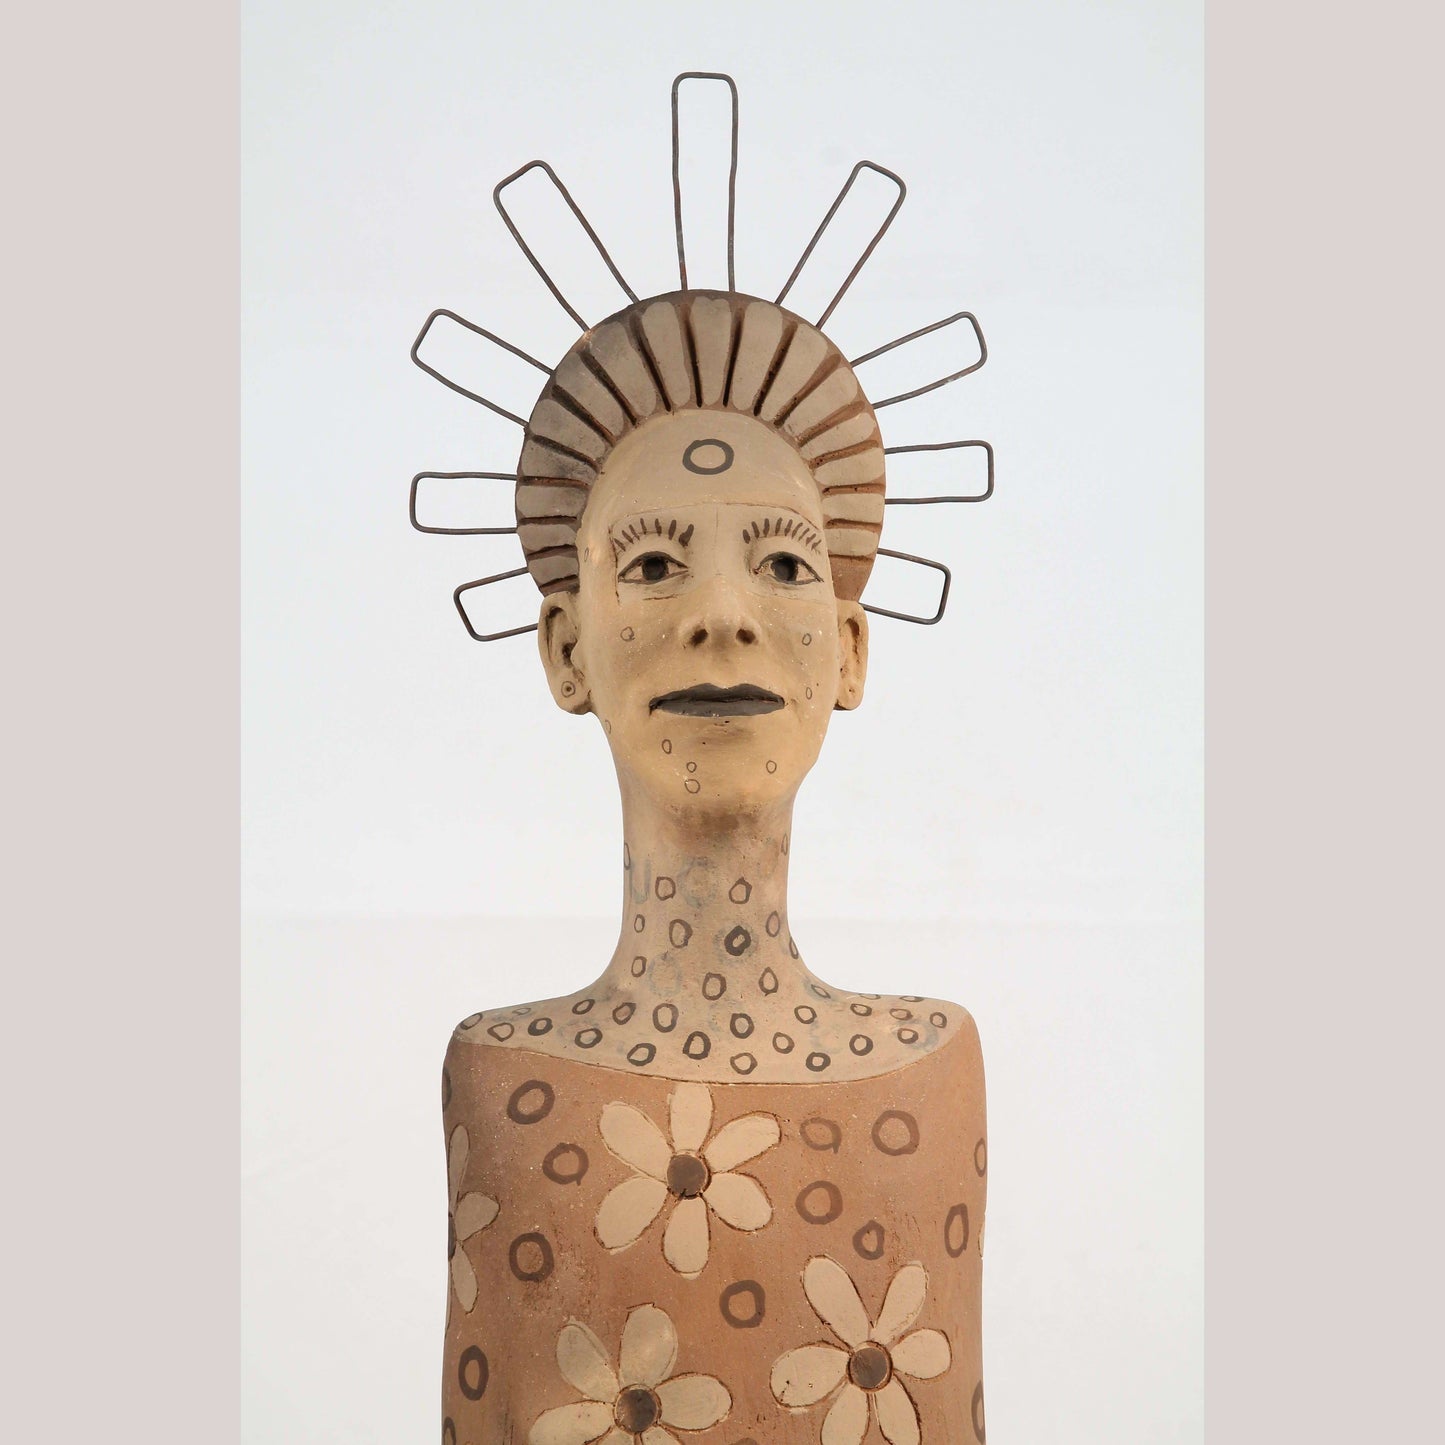 X-Lg Female Ceramic/Pottery Sculpture Mexican Fine Folk Art Collectible Décor #3